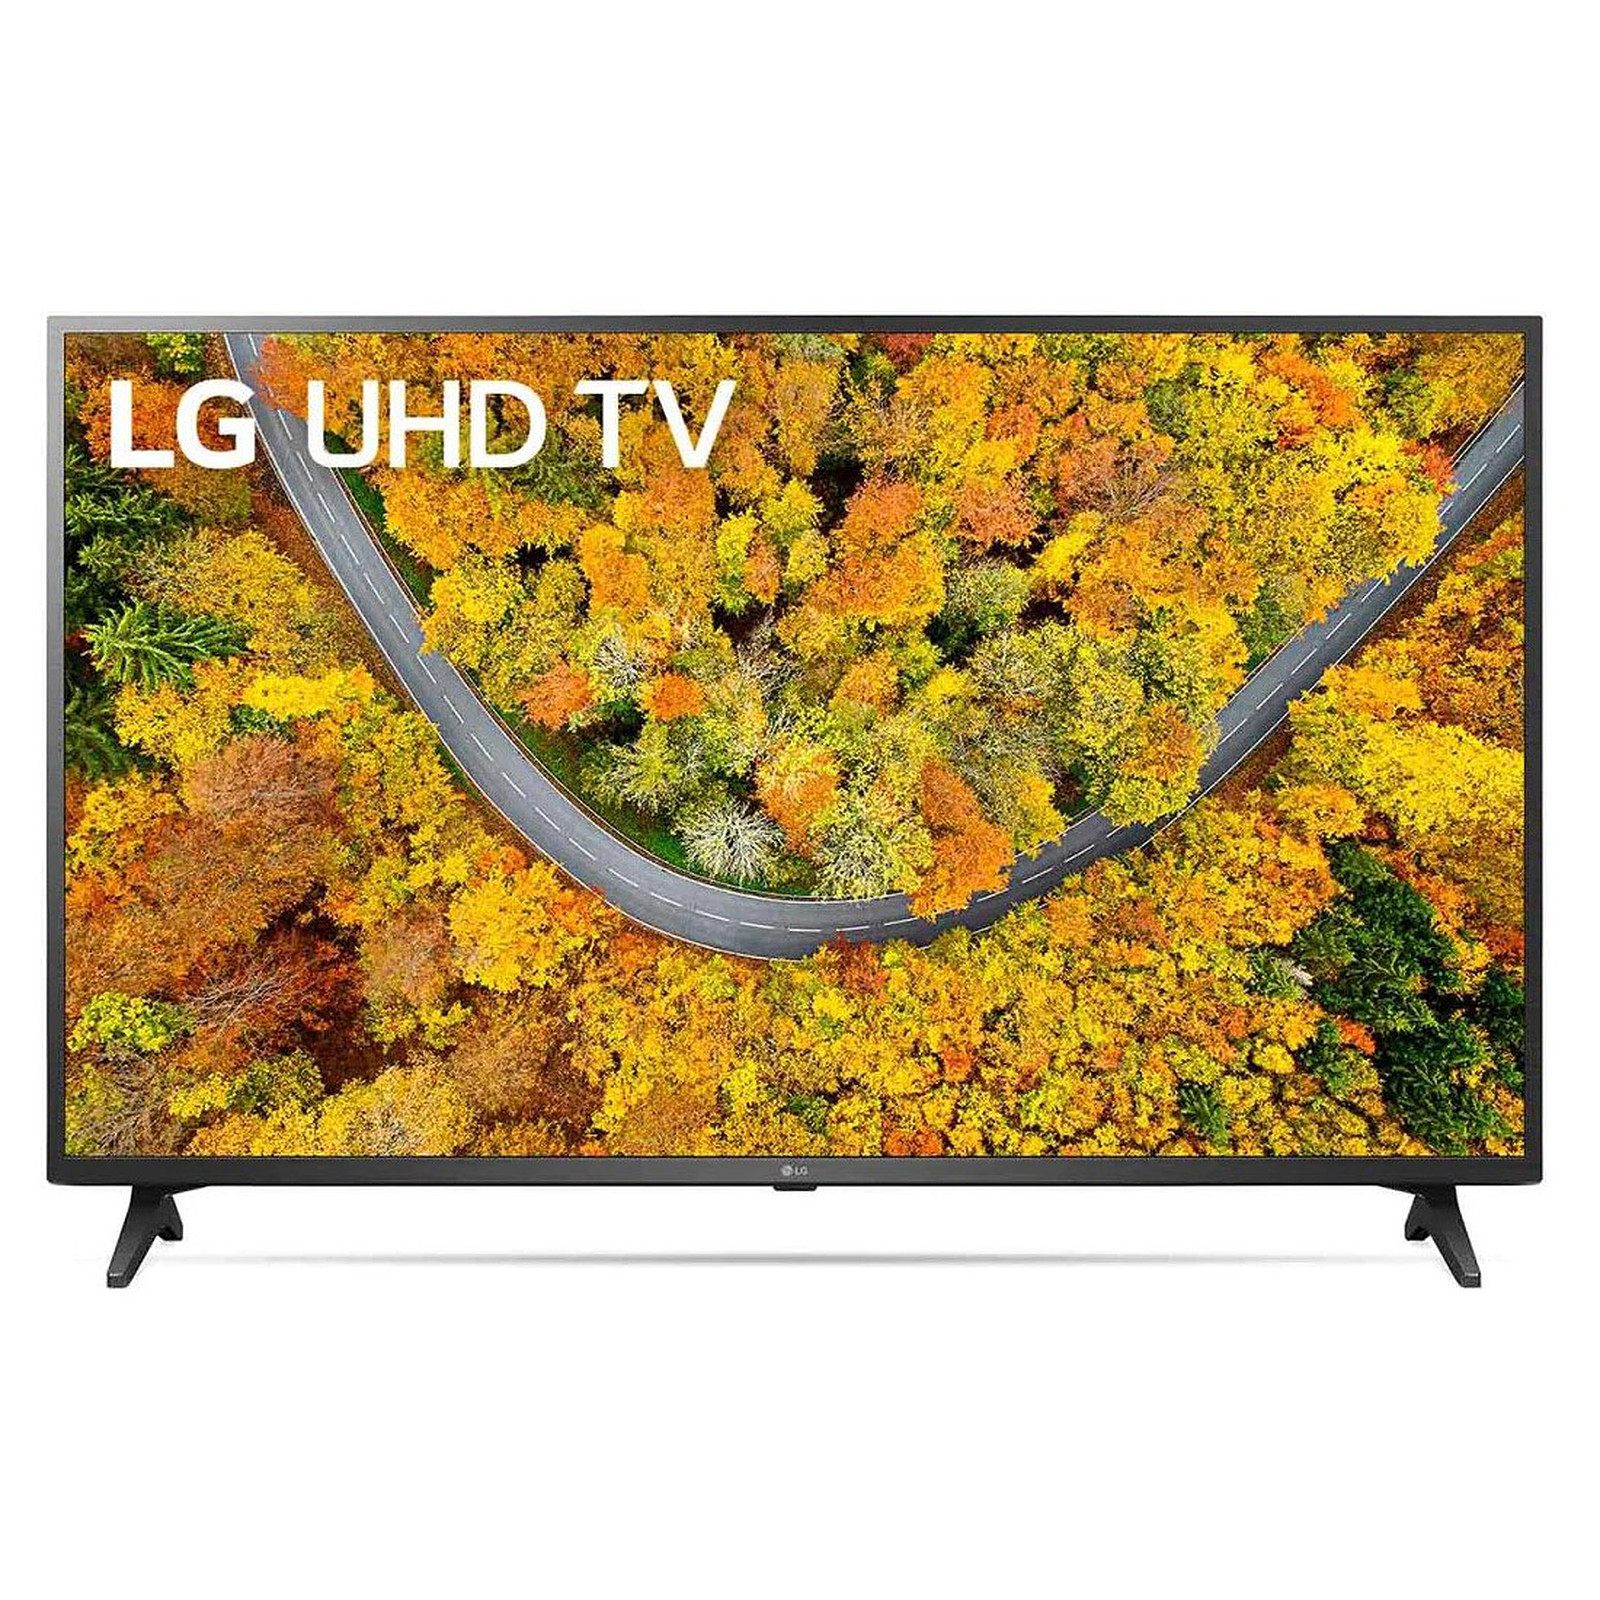 LG 55UP7500 - TV LG